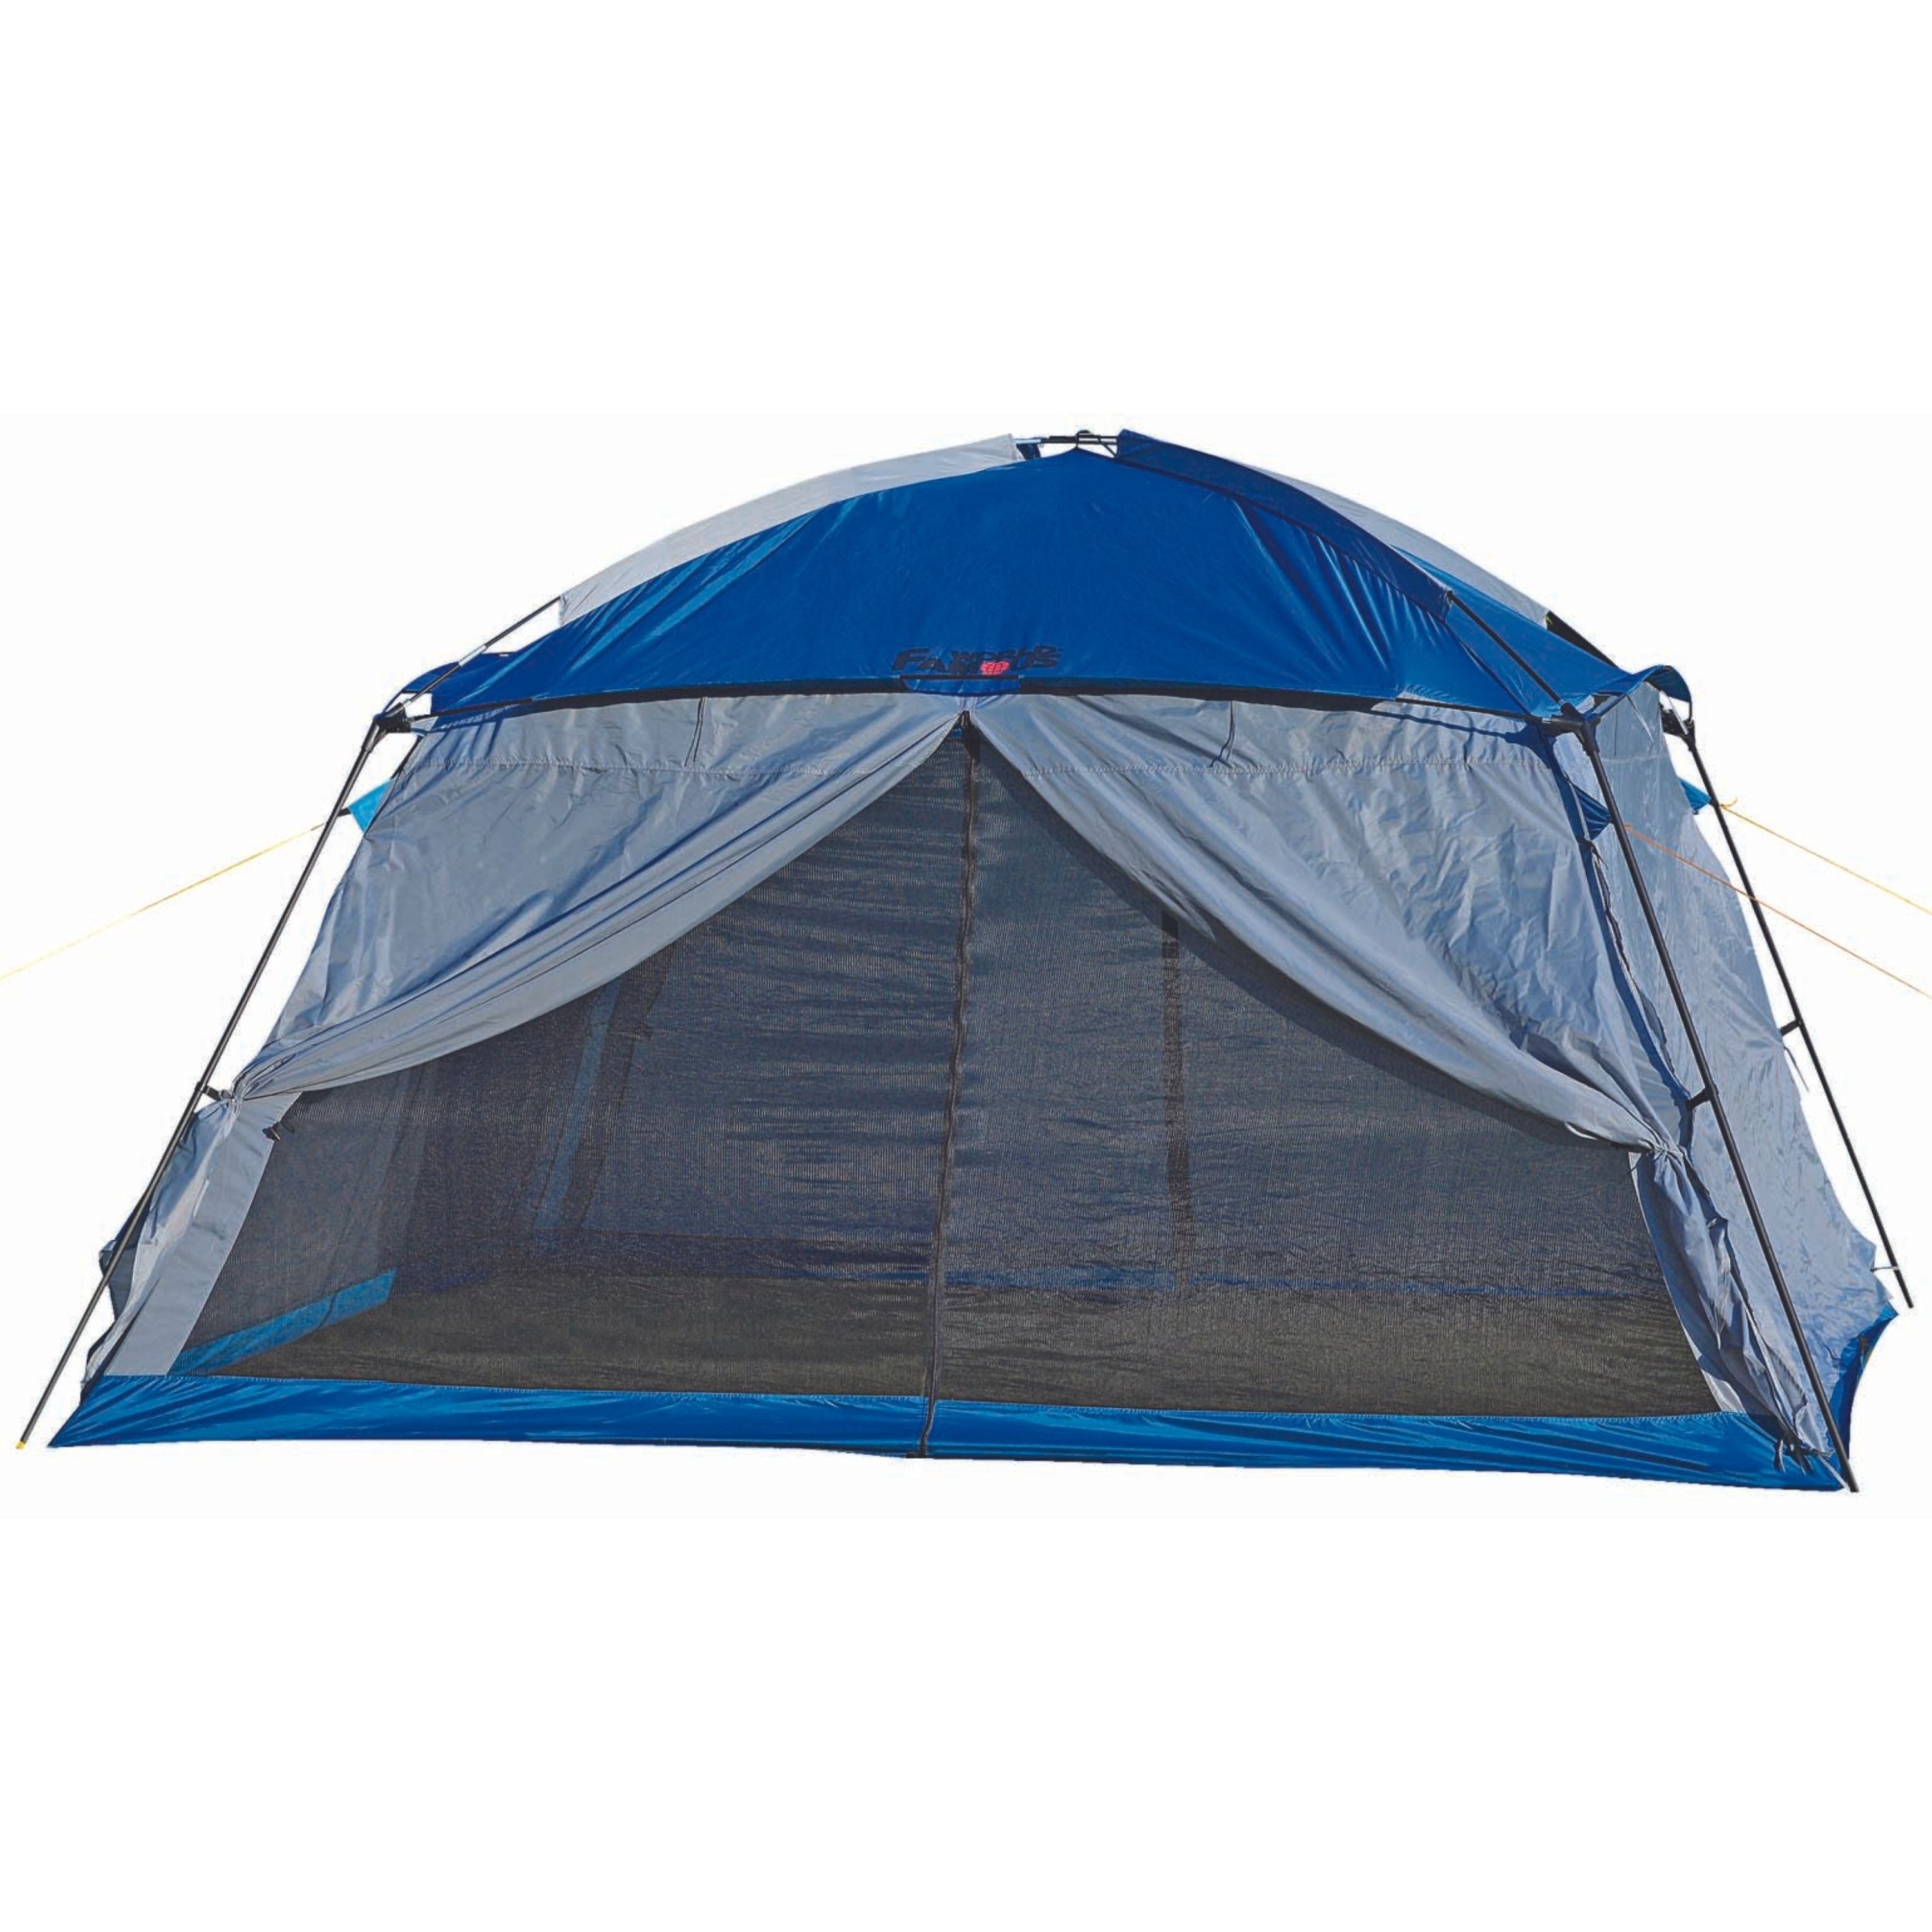 Tente moustiquaire Hobo||Mosquito net tent Hobo